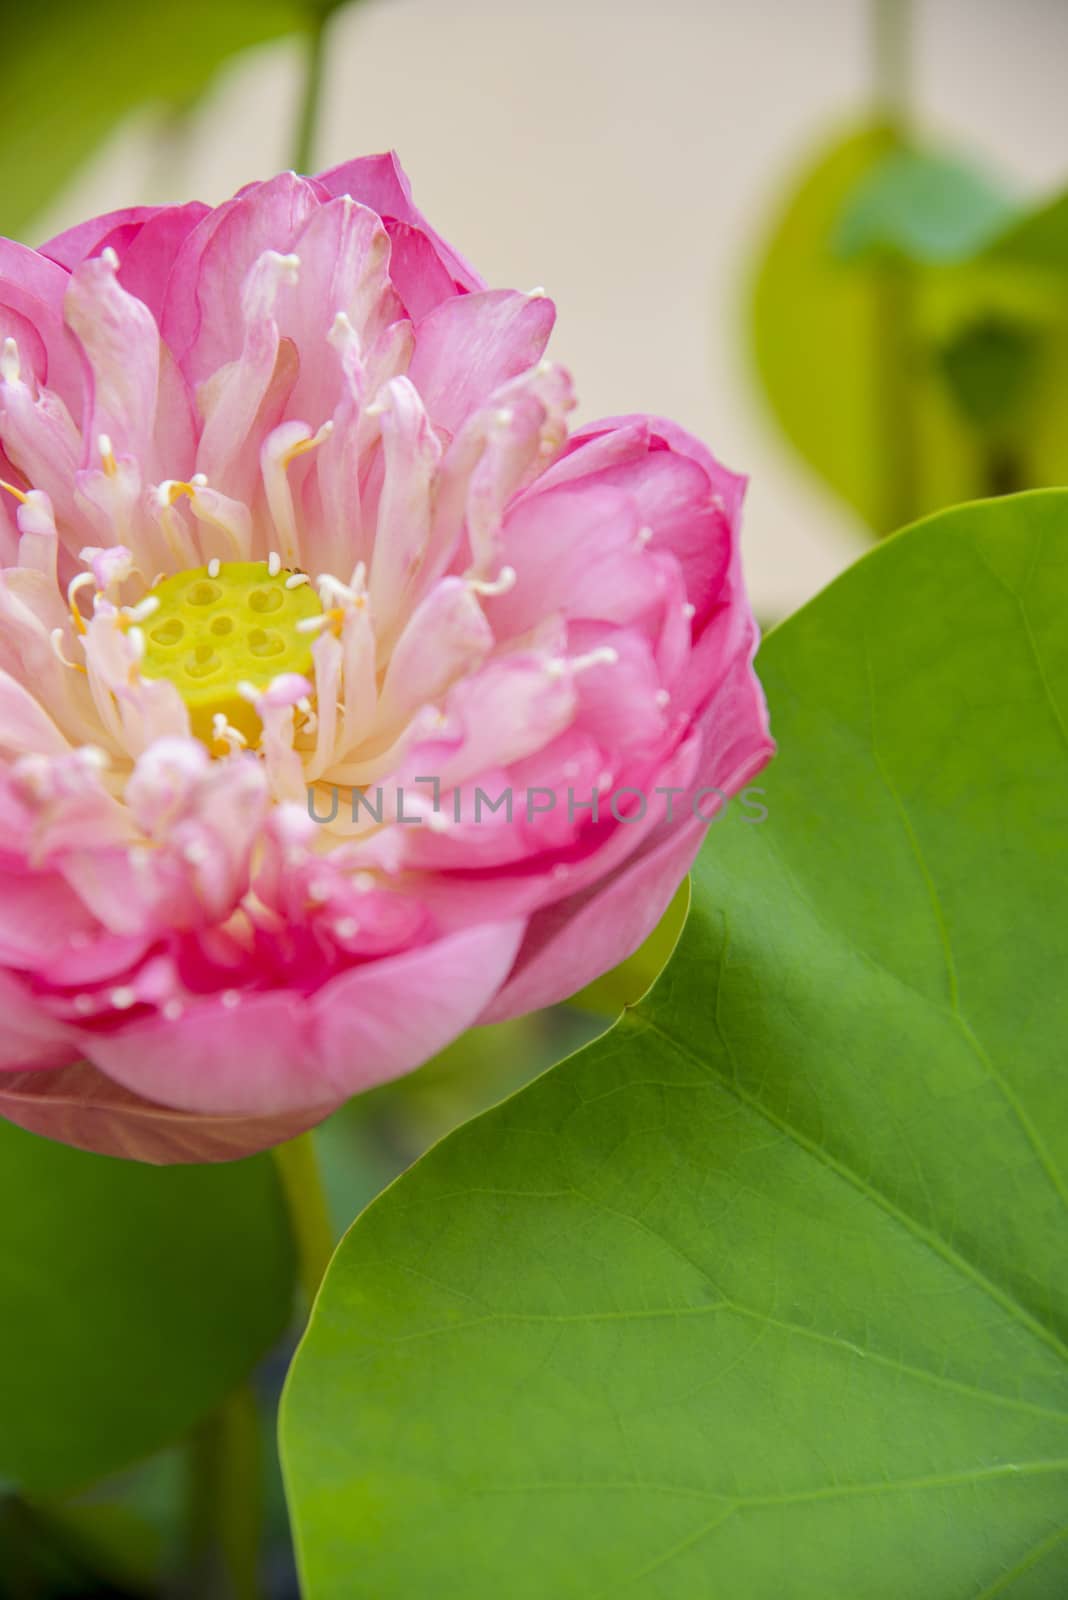 Pink lotus with green leaf2 by gjeerawut